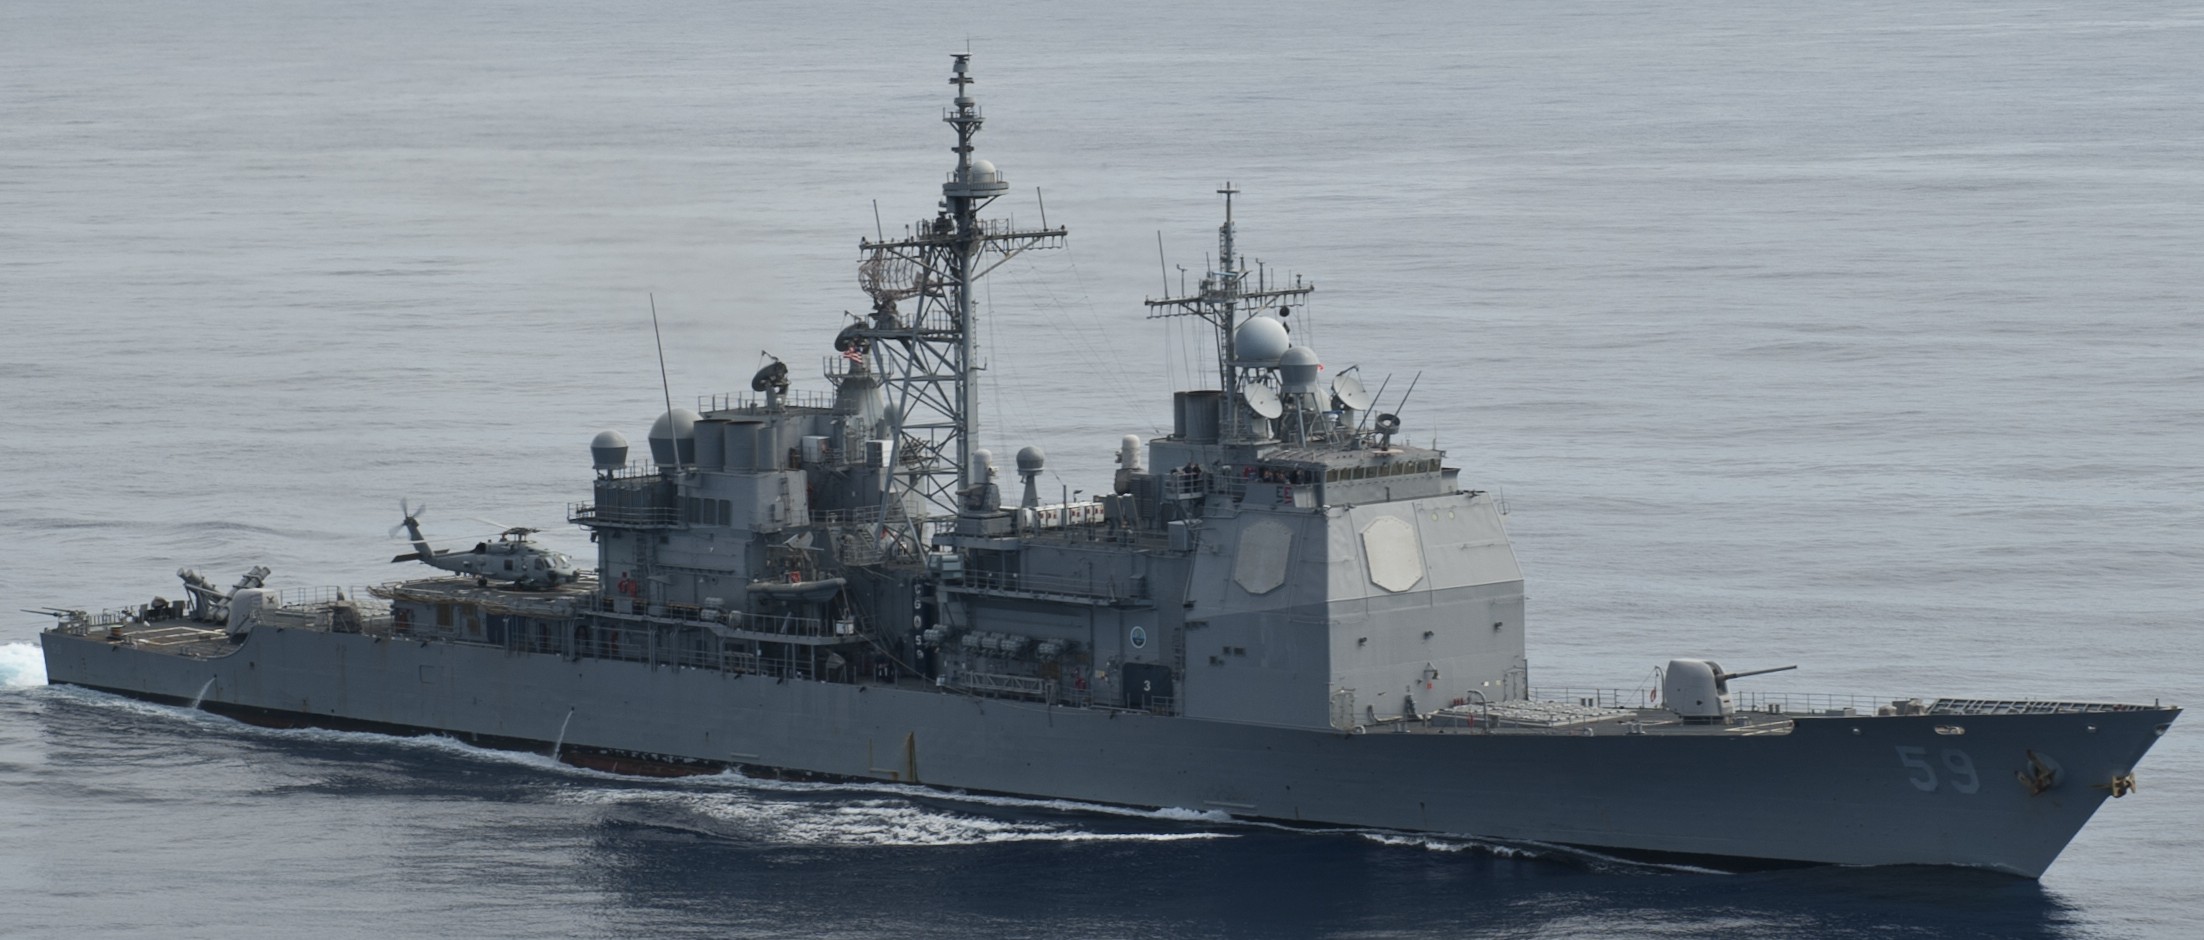 cg-59 uss princeton ticonderoga class guided missile cruiser aegis us navy 38